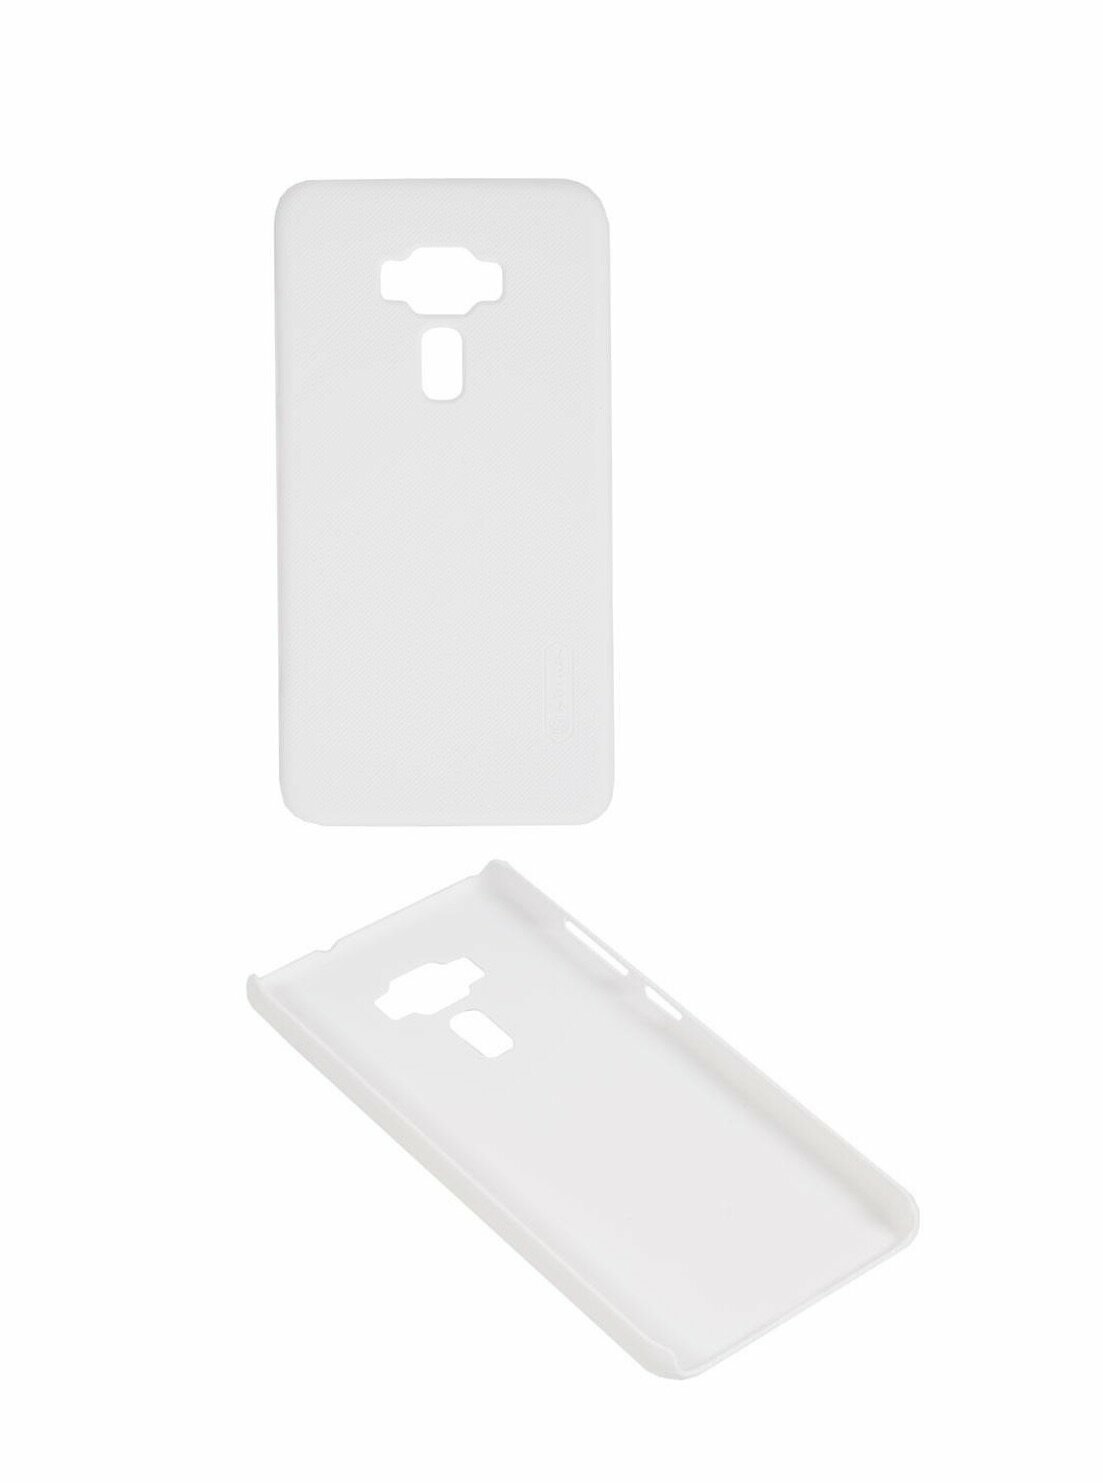 Case / Чехол-накладка Nillkin для ASUS ZE552KL (белый)